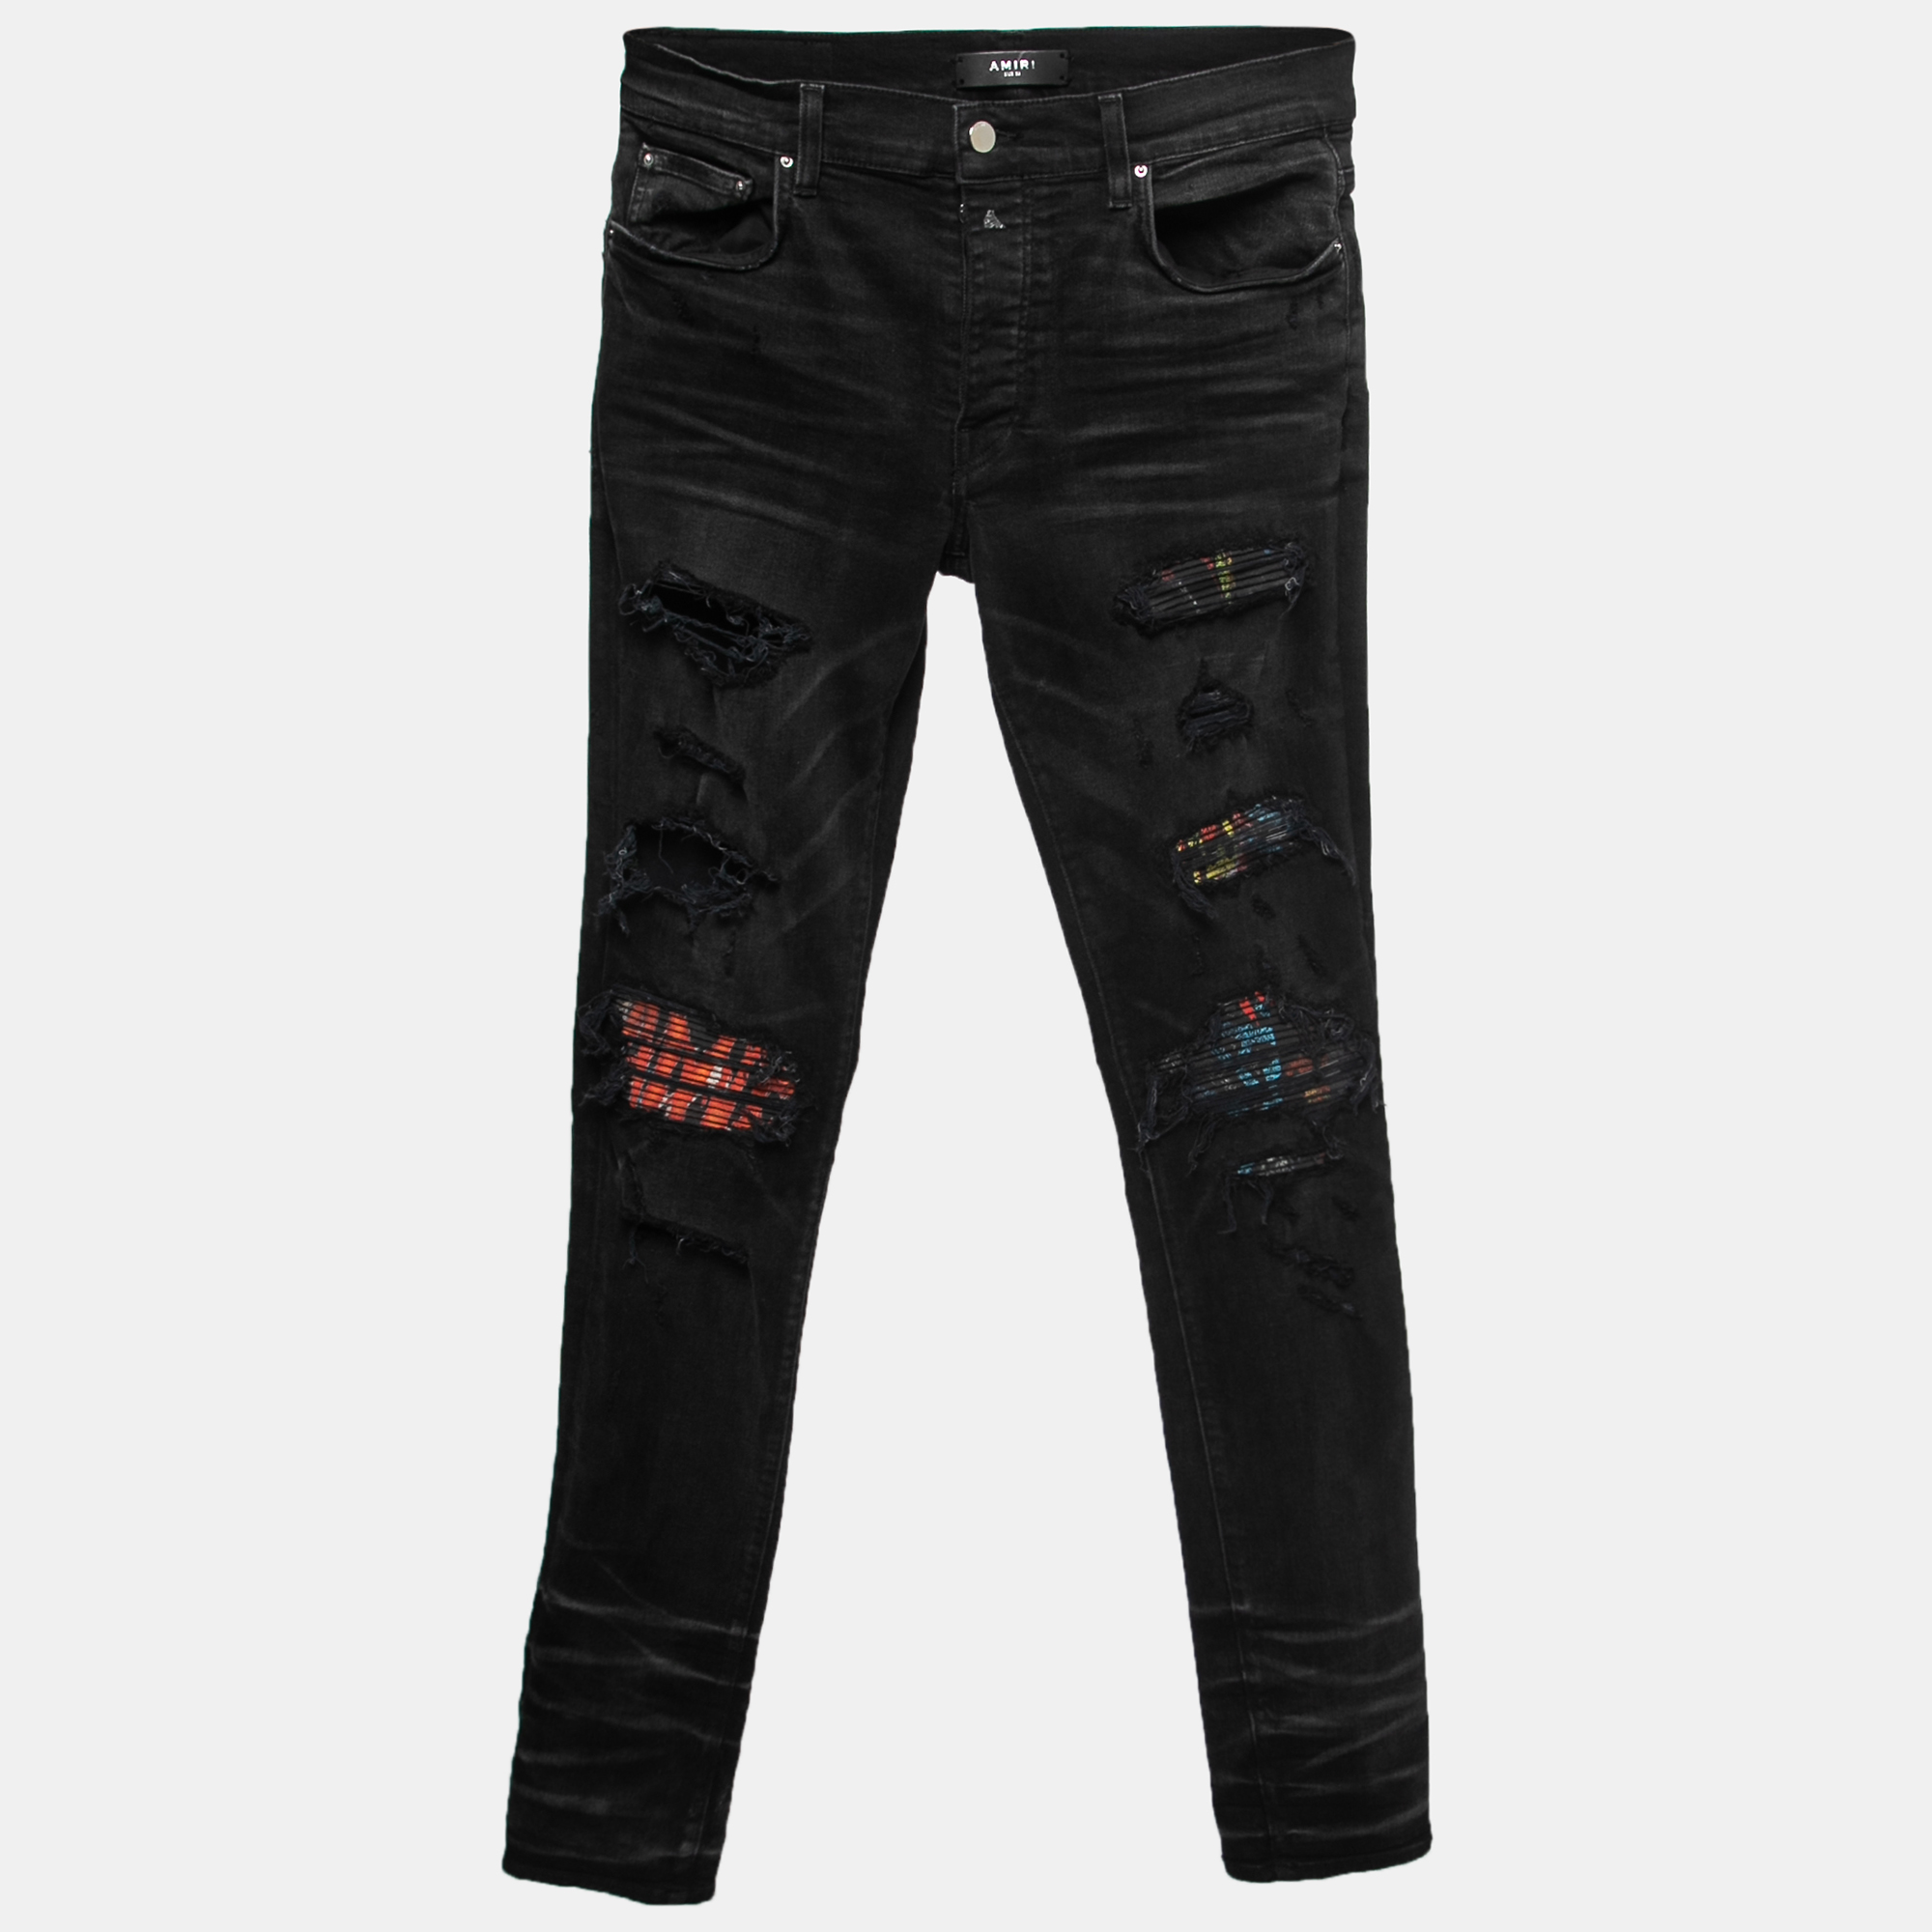 Pre-owned Amiri Black Distressed Denim Panelled Skinny Jeans M Waist 32"